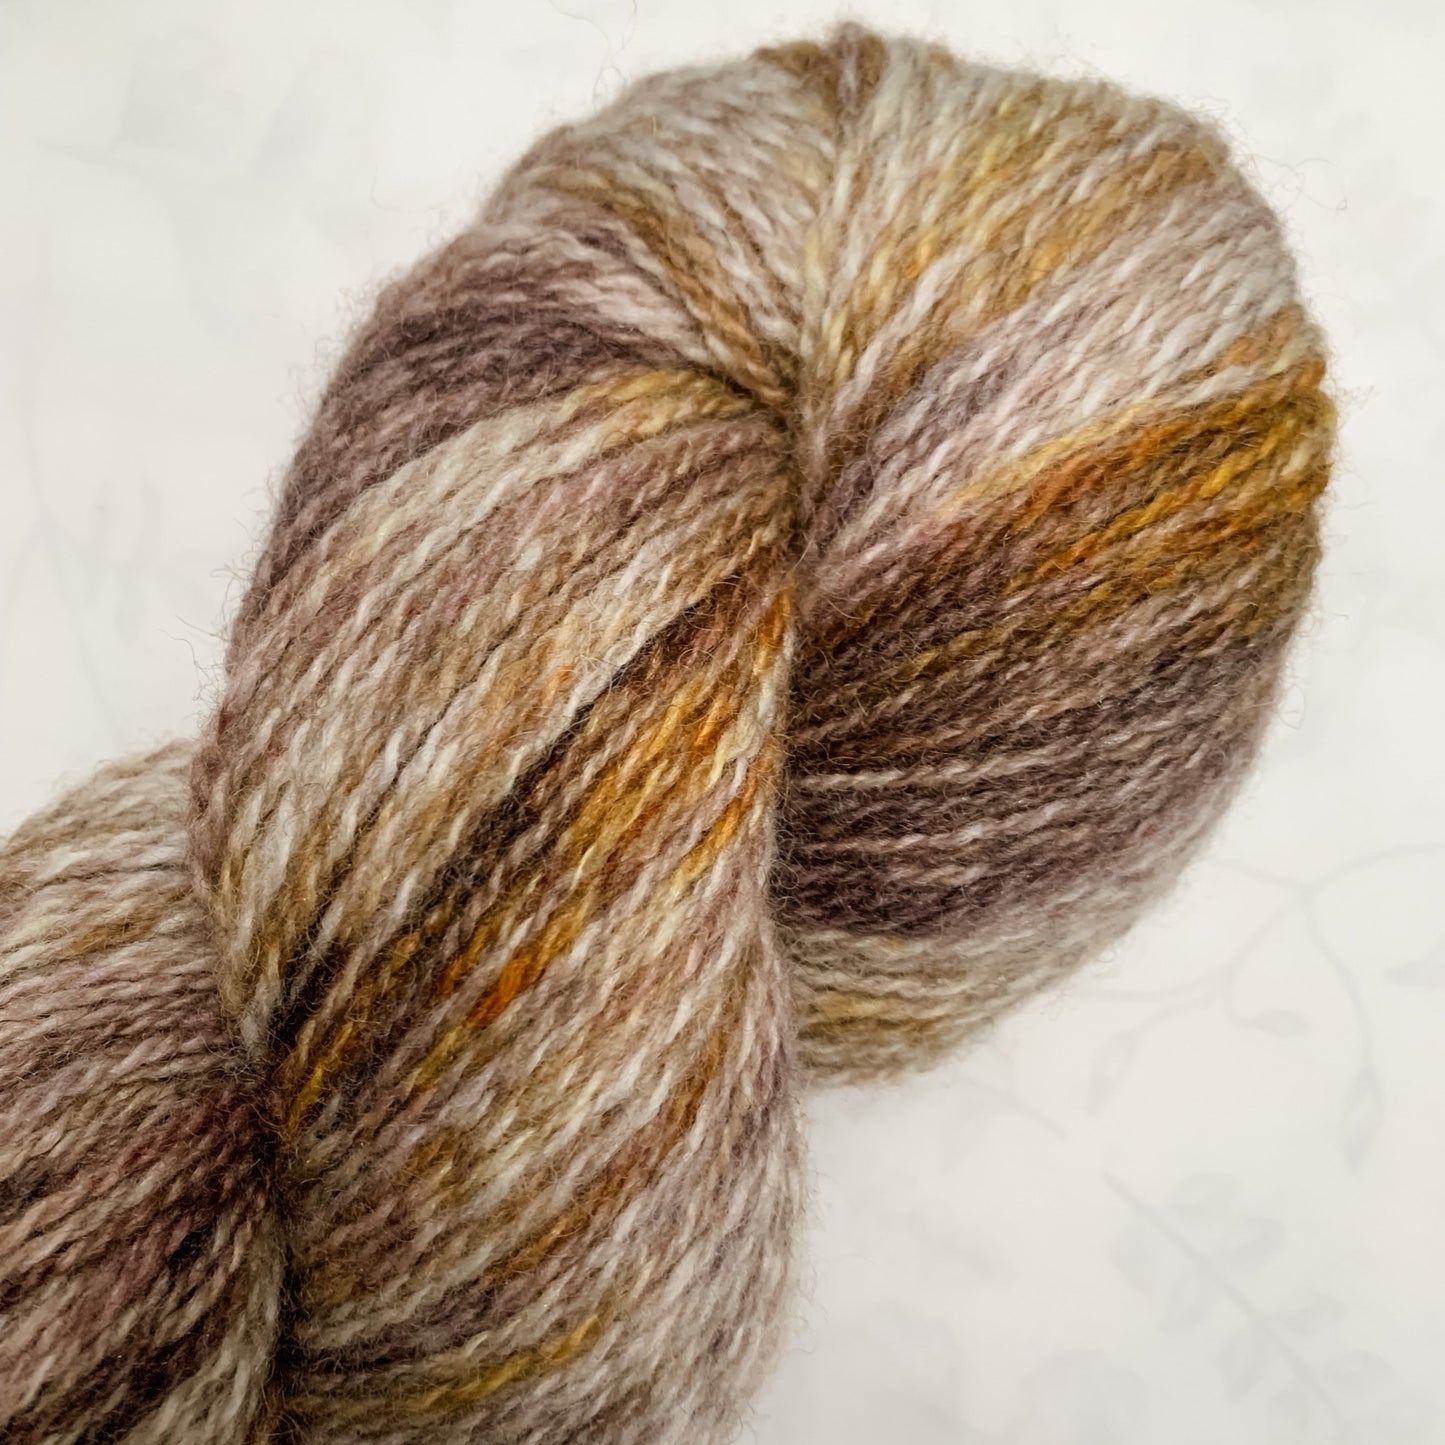 Hazelnut Treat - Trollfjord sock - Variegated Yarn - Hand dyed yarn